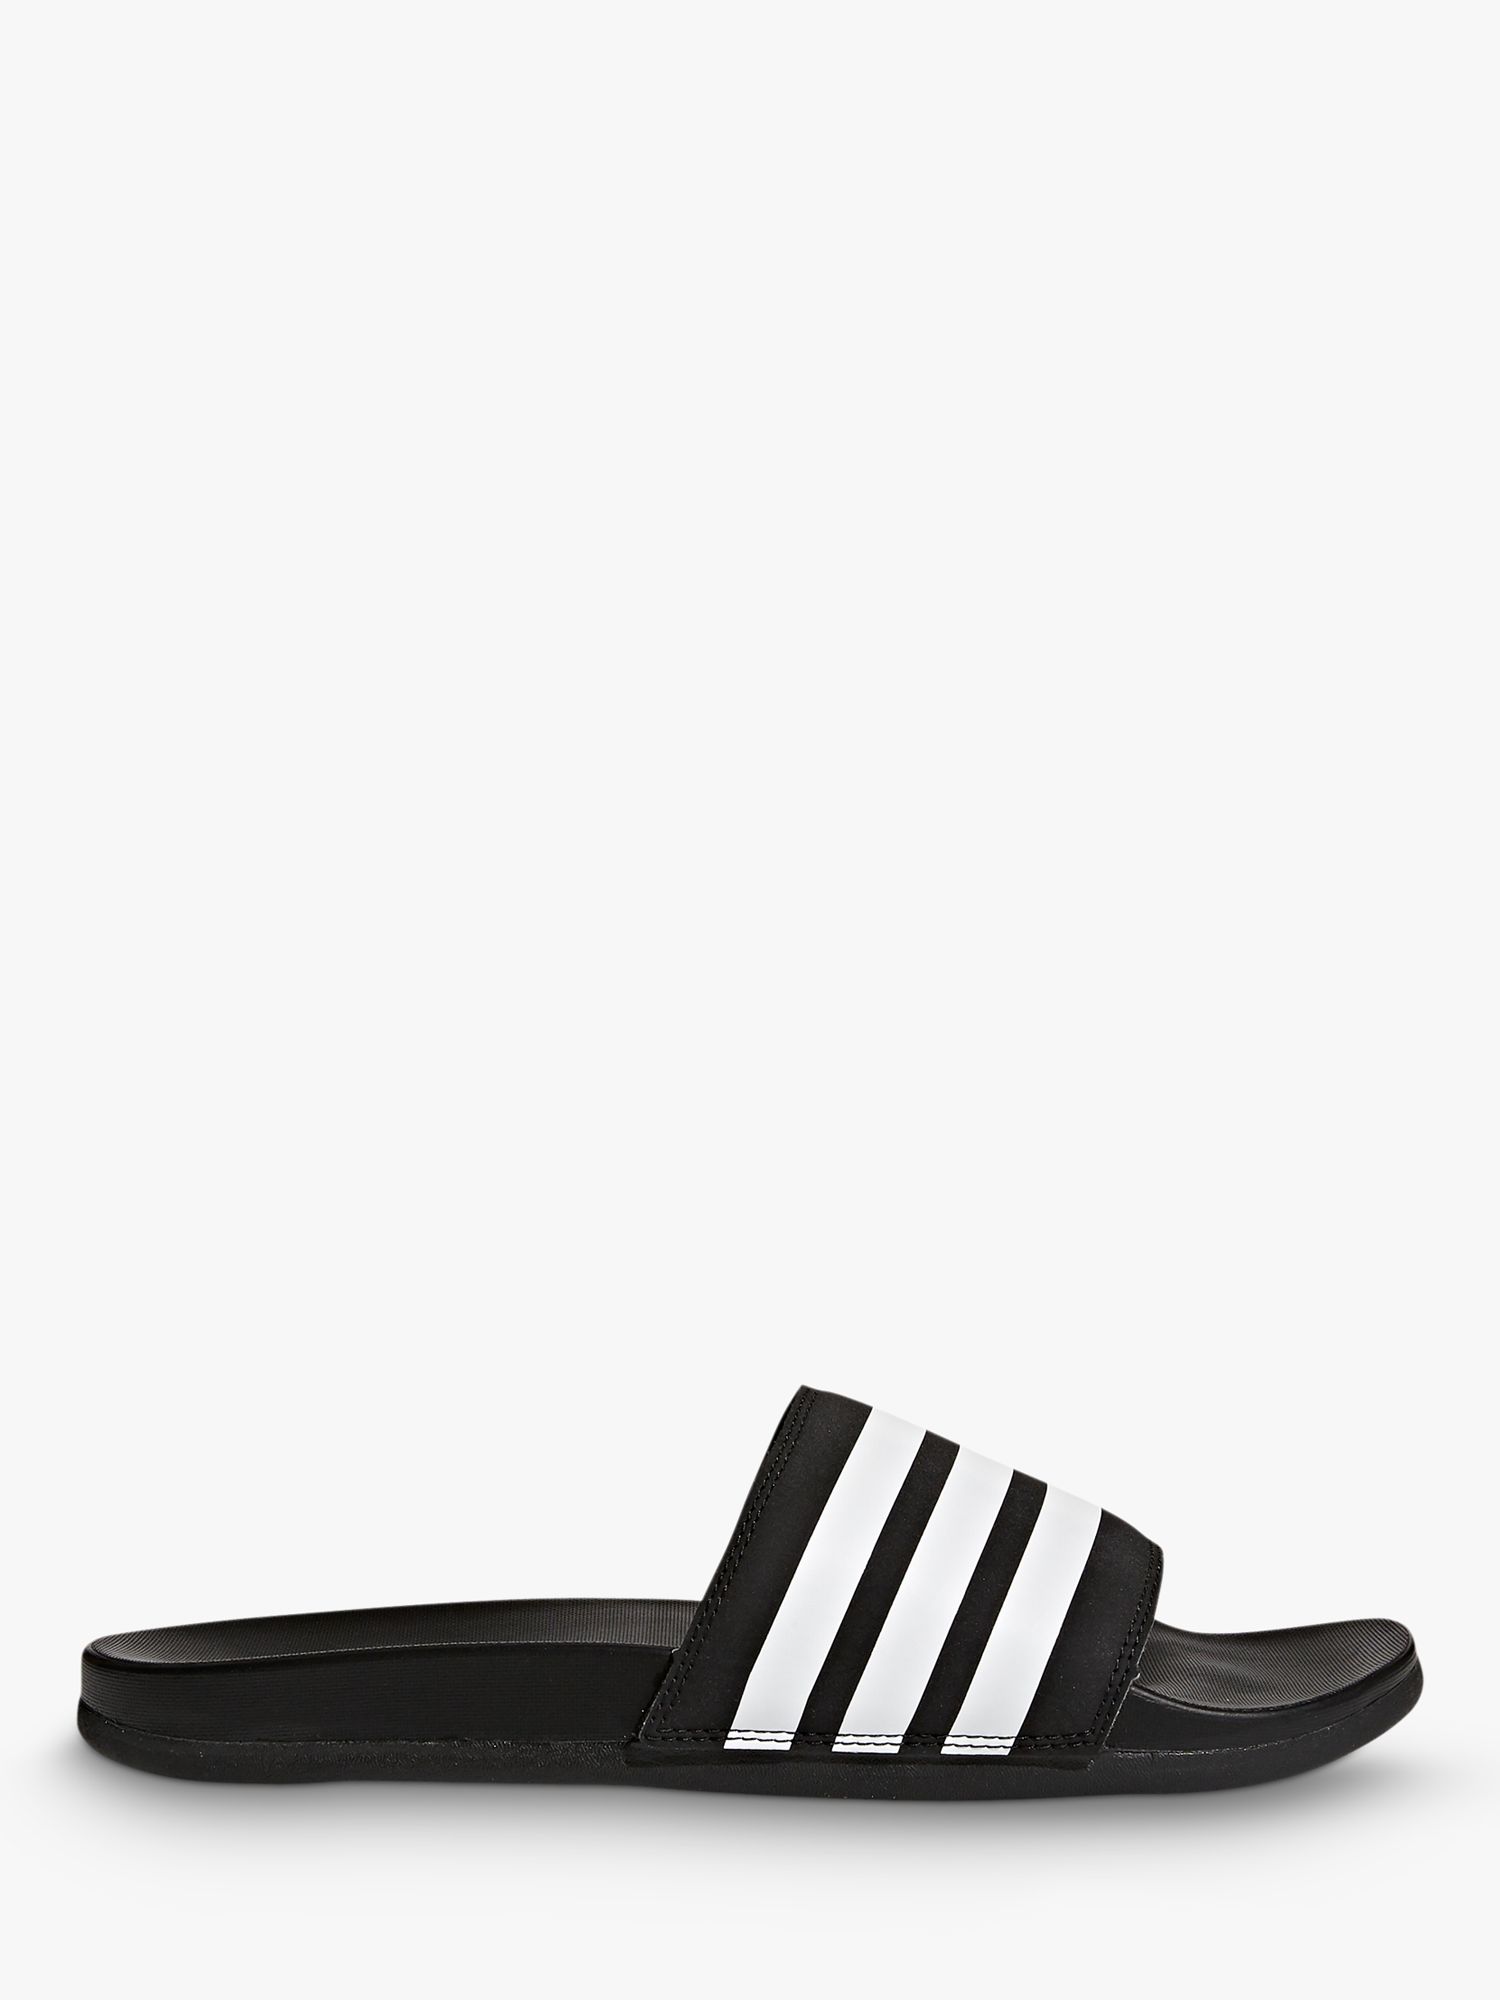 adidas slipper black and white